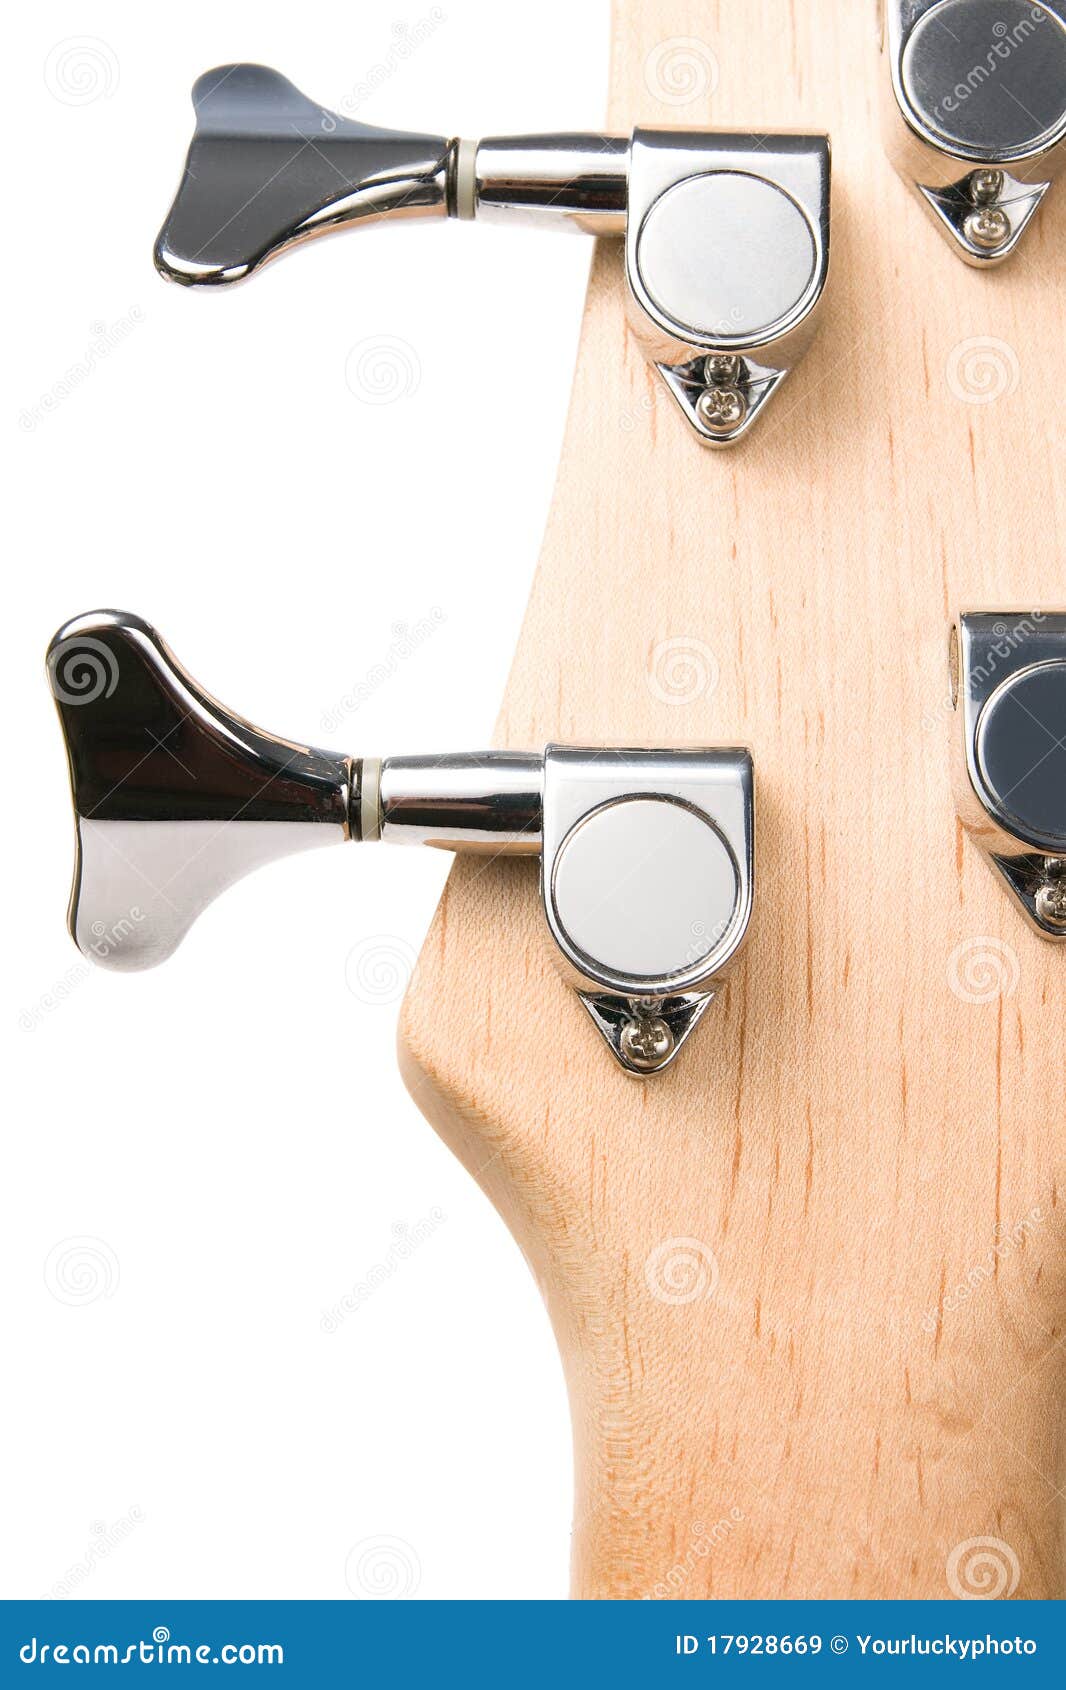 bass guitar fingerboard head metal pins